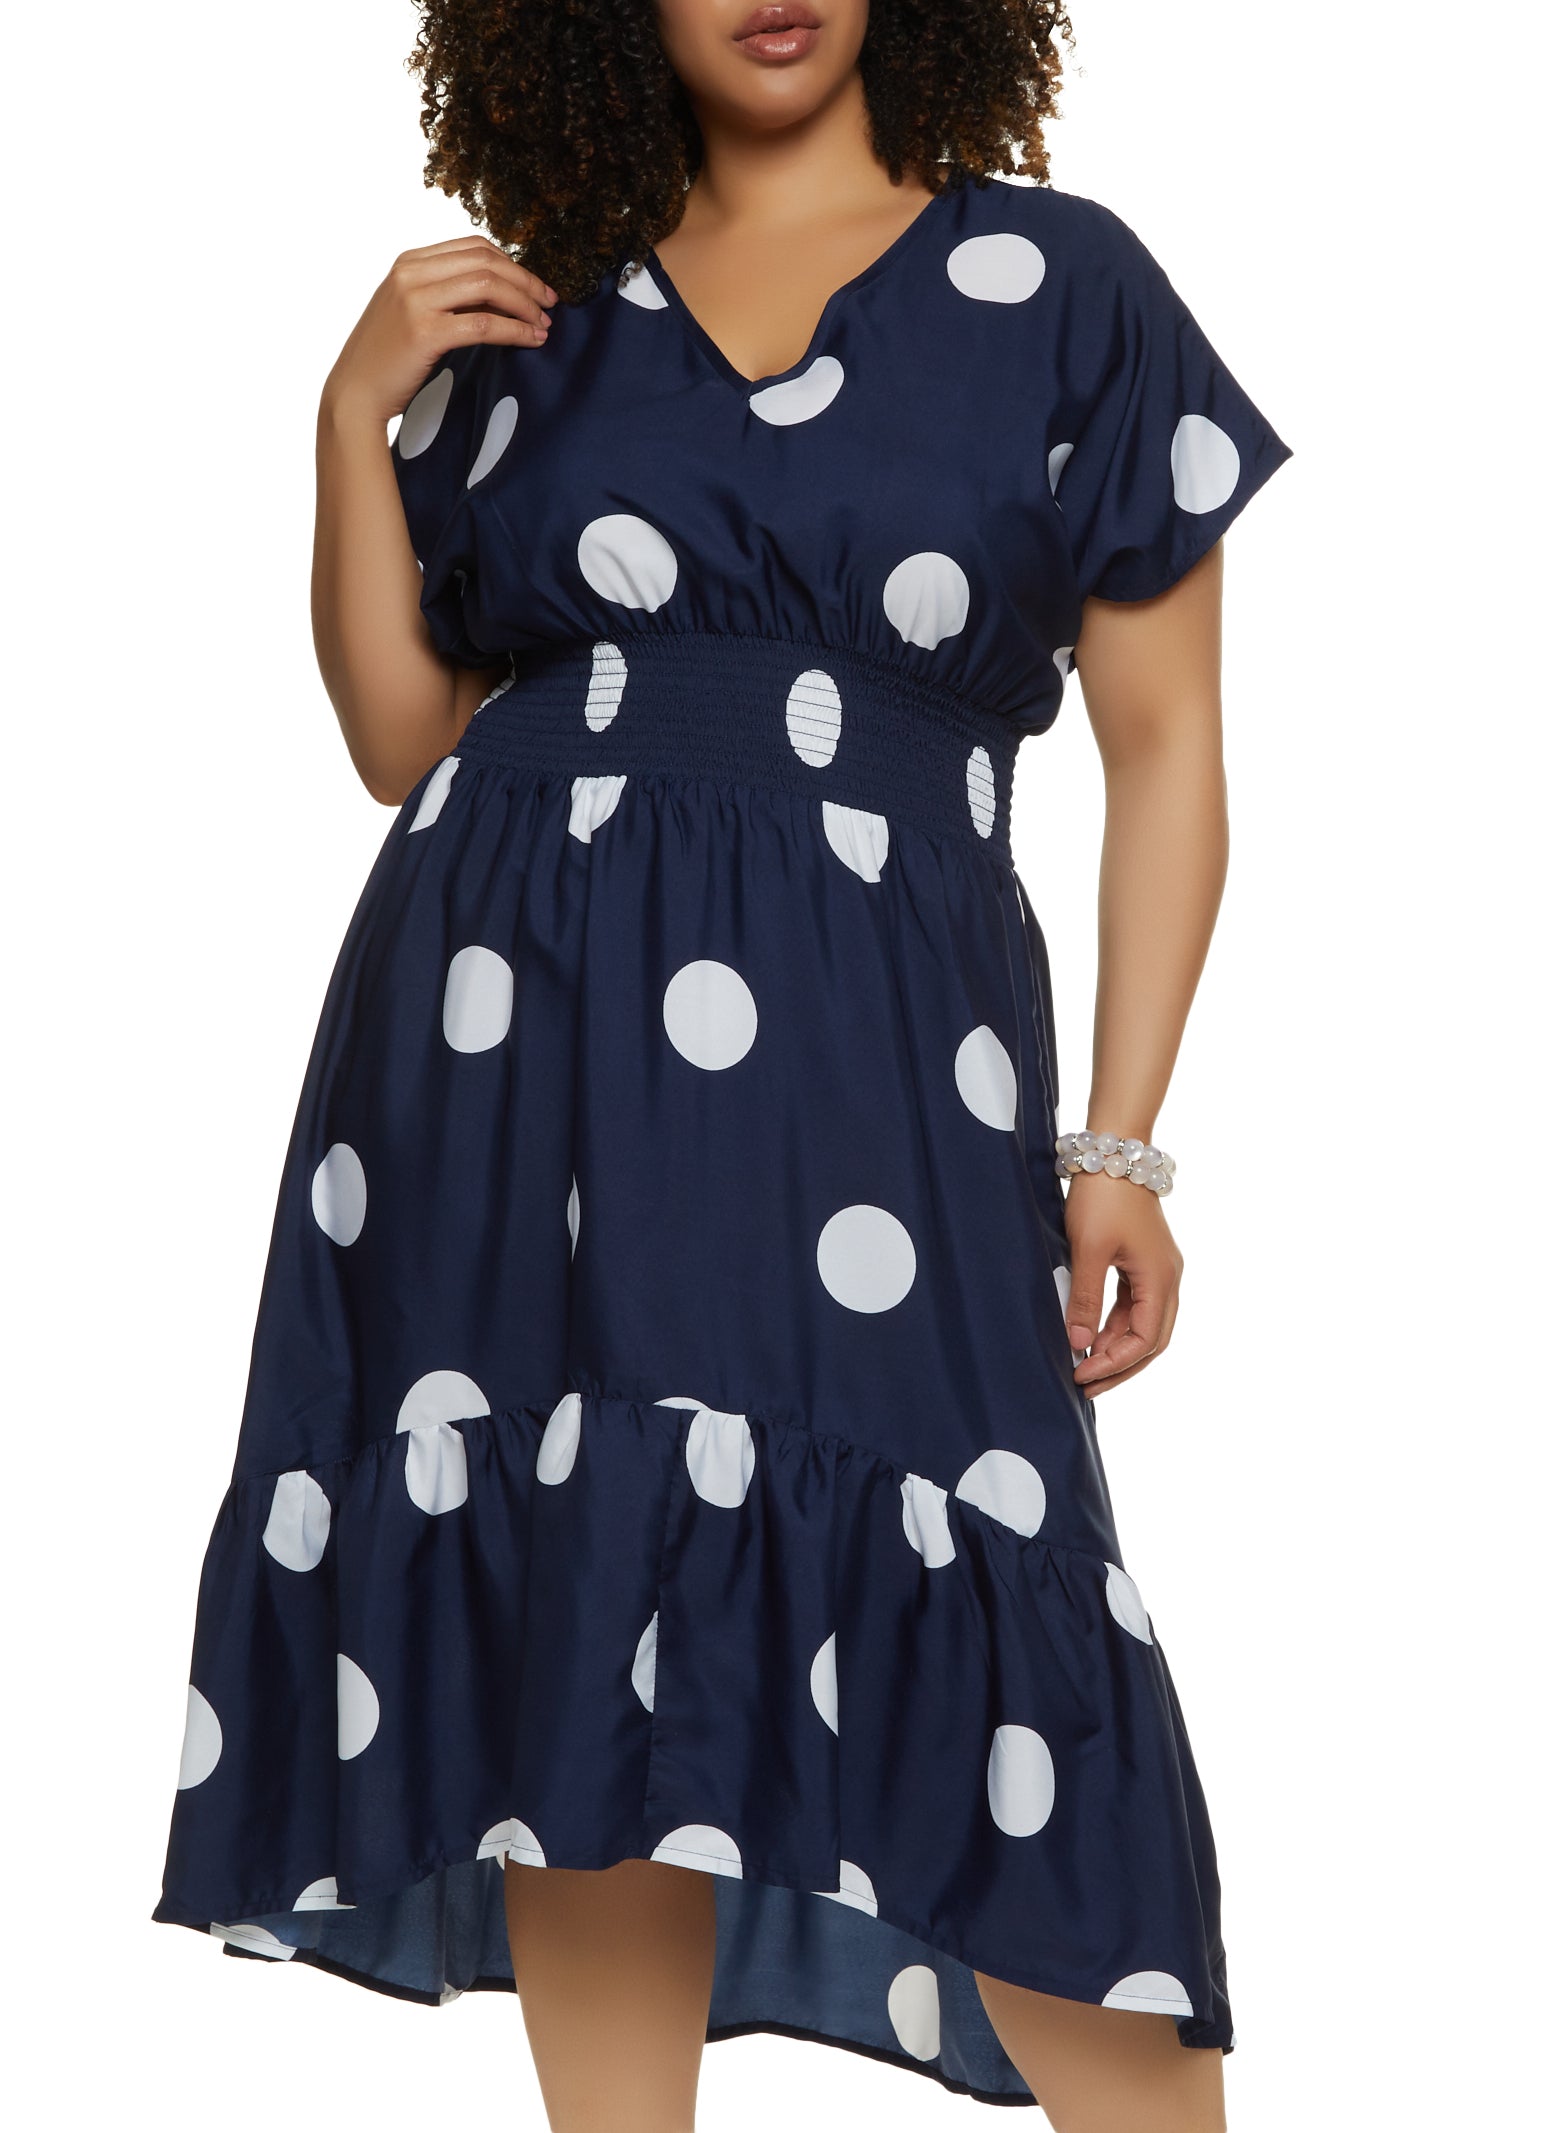 Plus Size Polka Dot Empire Waist Dress